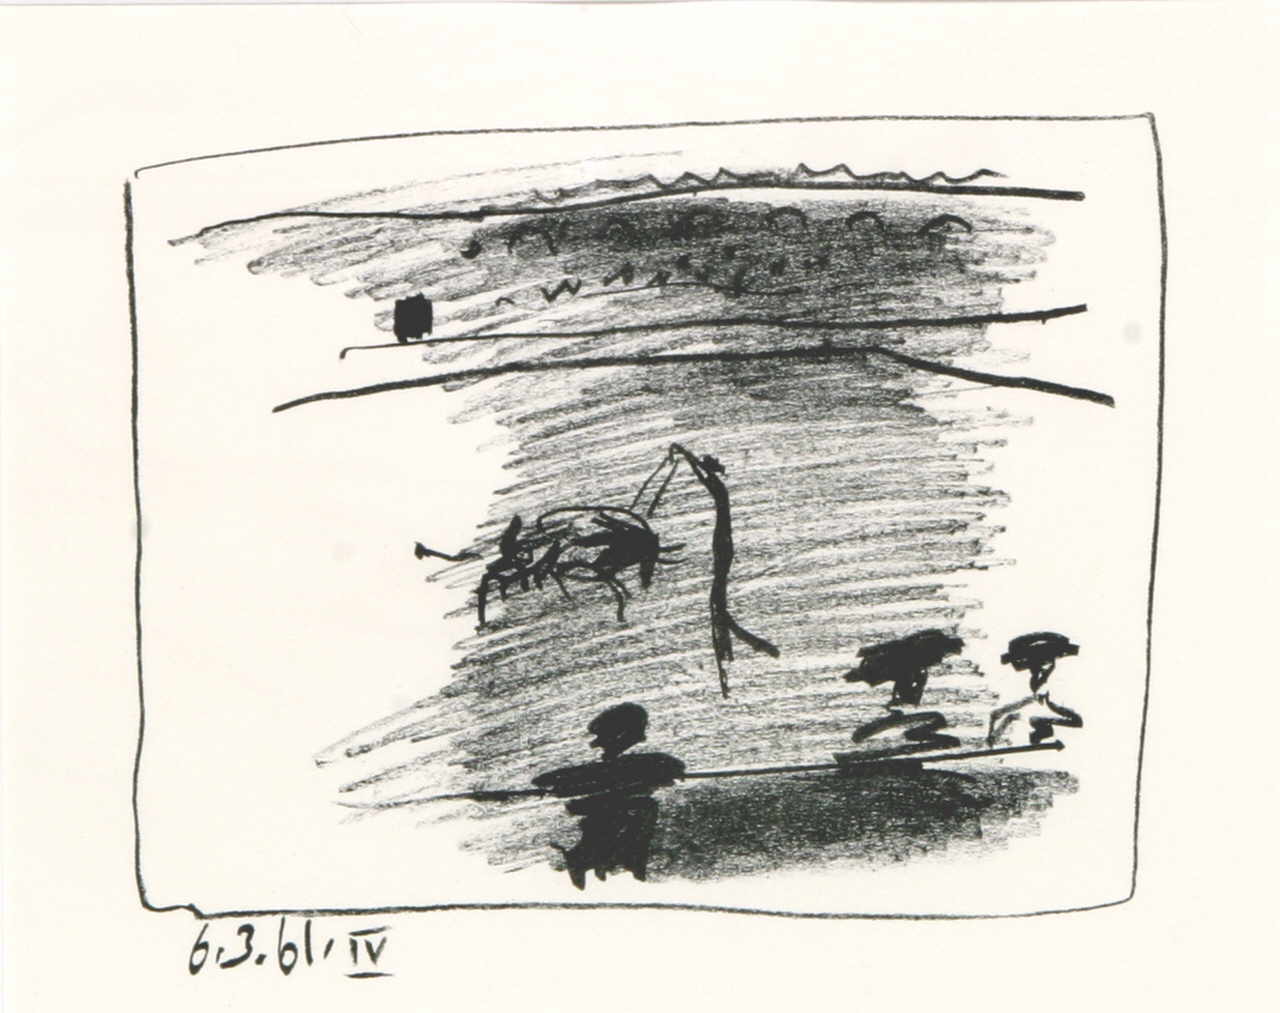 Picasso Pablo 
"A los Toros", 1963
lithography
23 x 29 cm